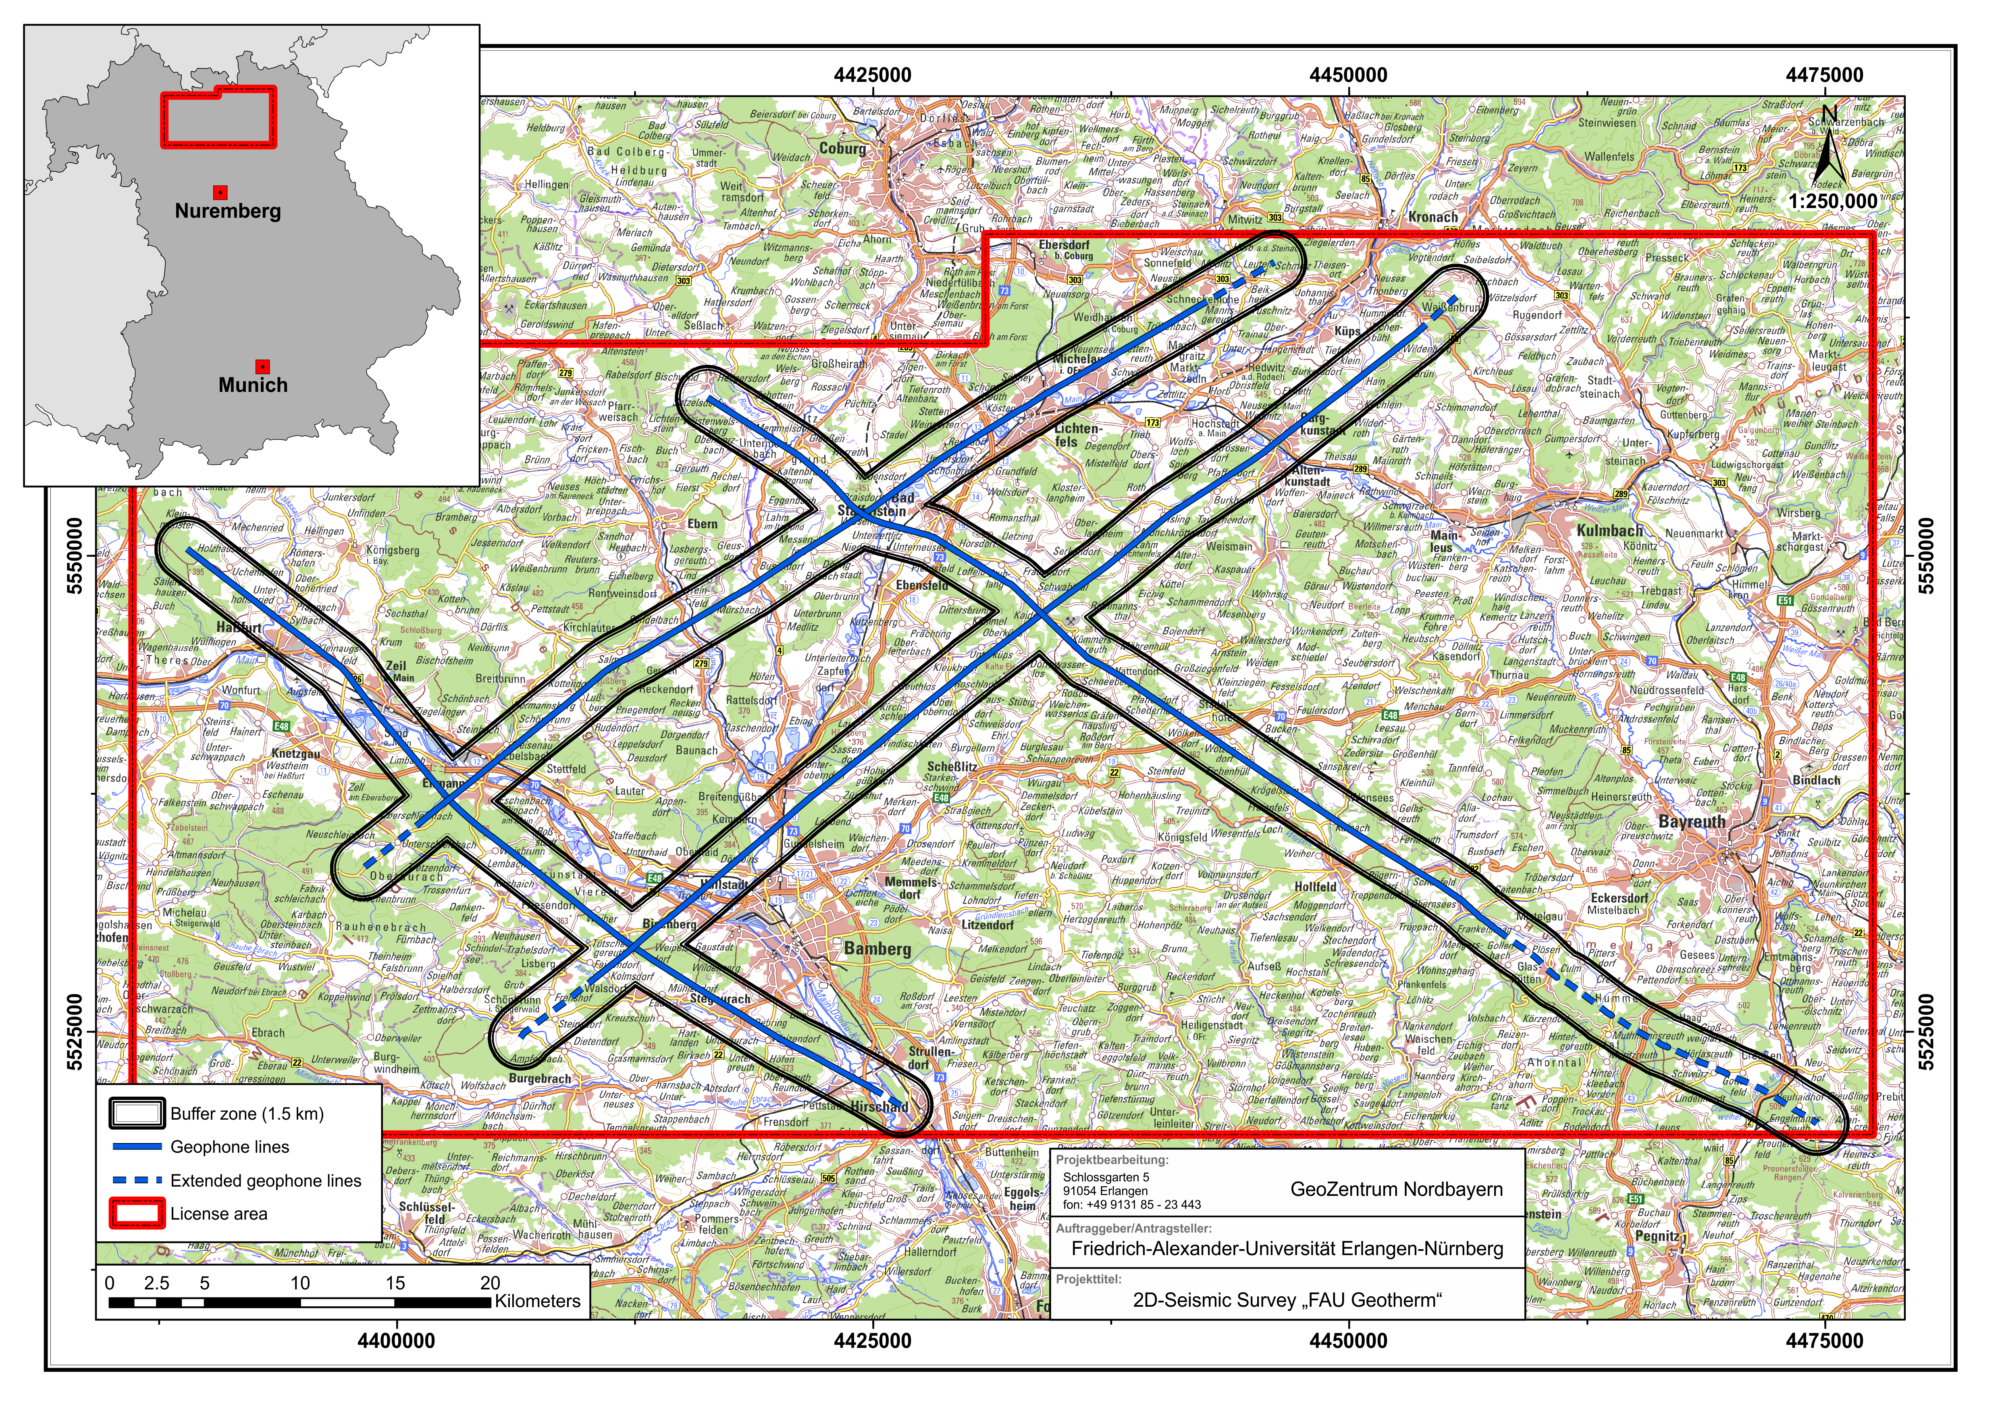 Planned course of the 2D seismic survey in Franconia (basic data: Bayerische Vermessungsverwaltung - www.geodaten.bayern.de) (Created by: Andreas Eberts)